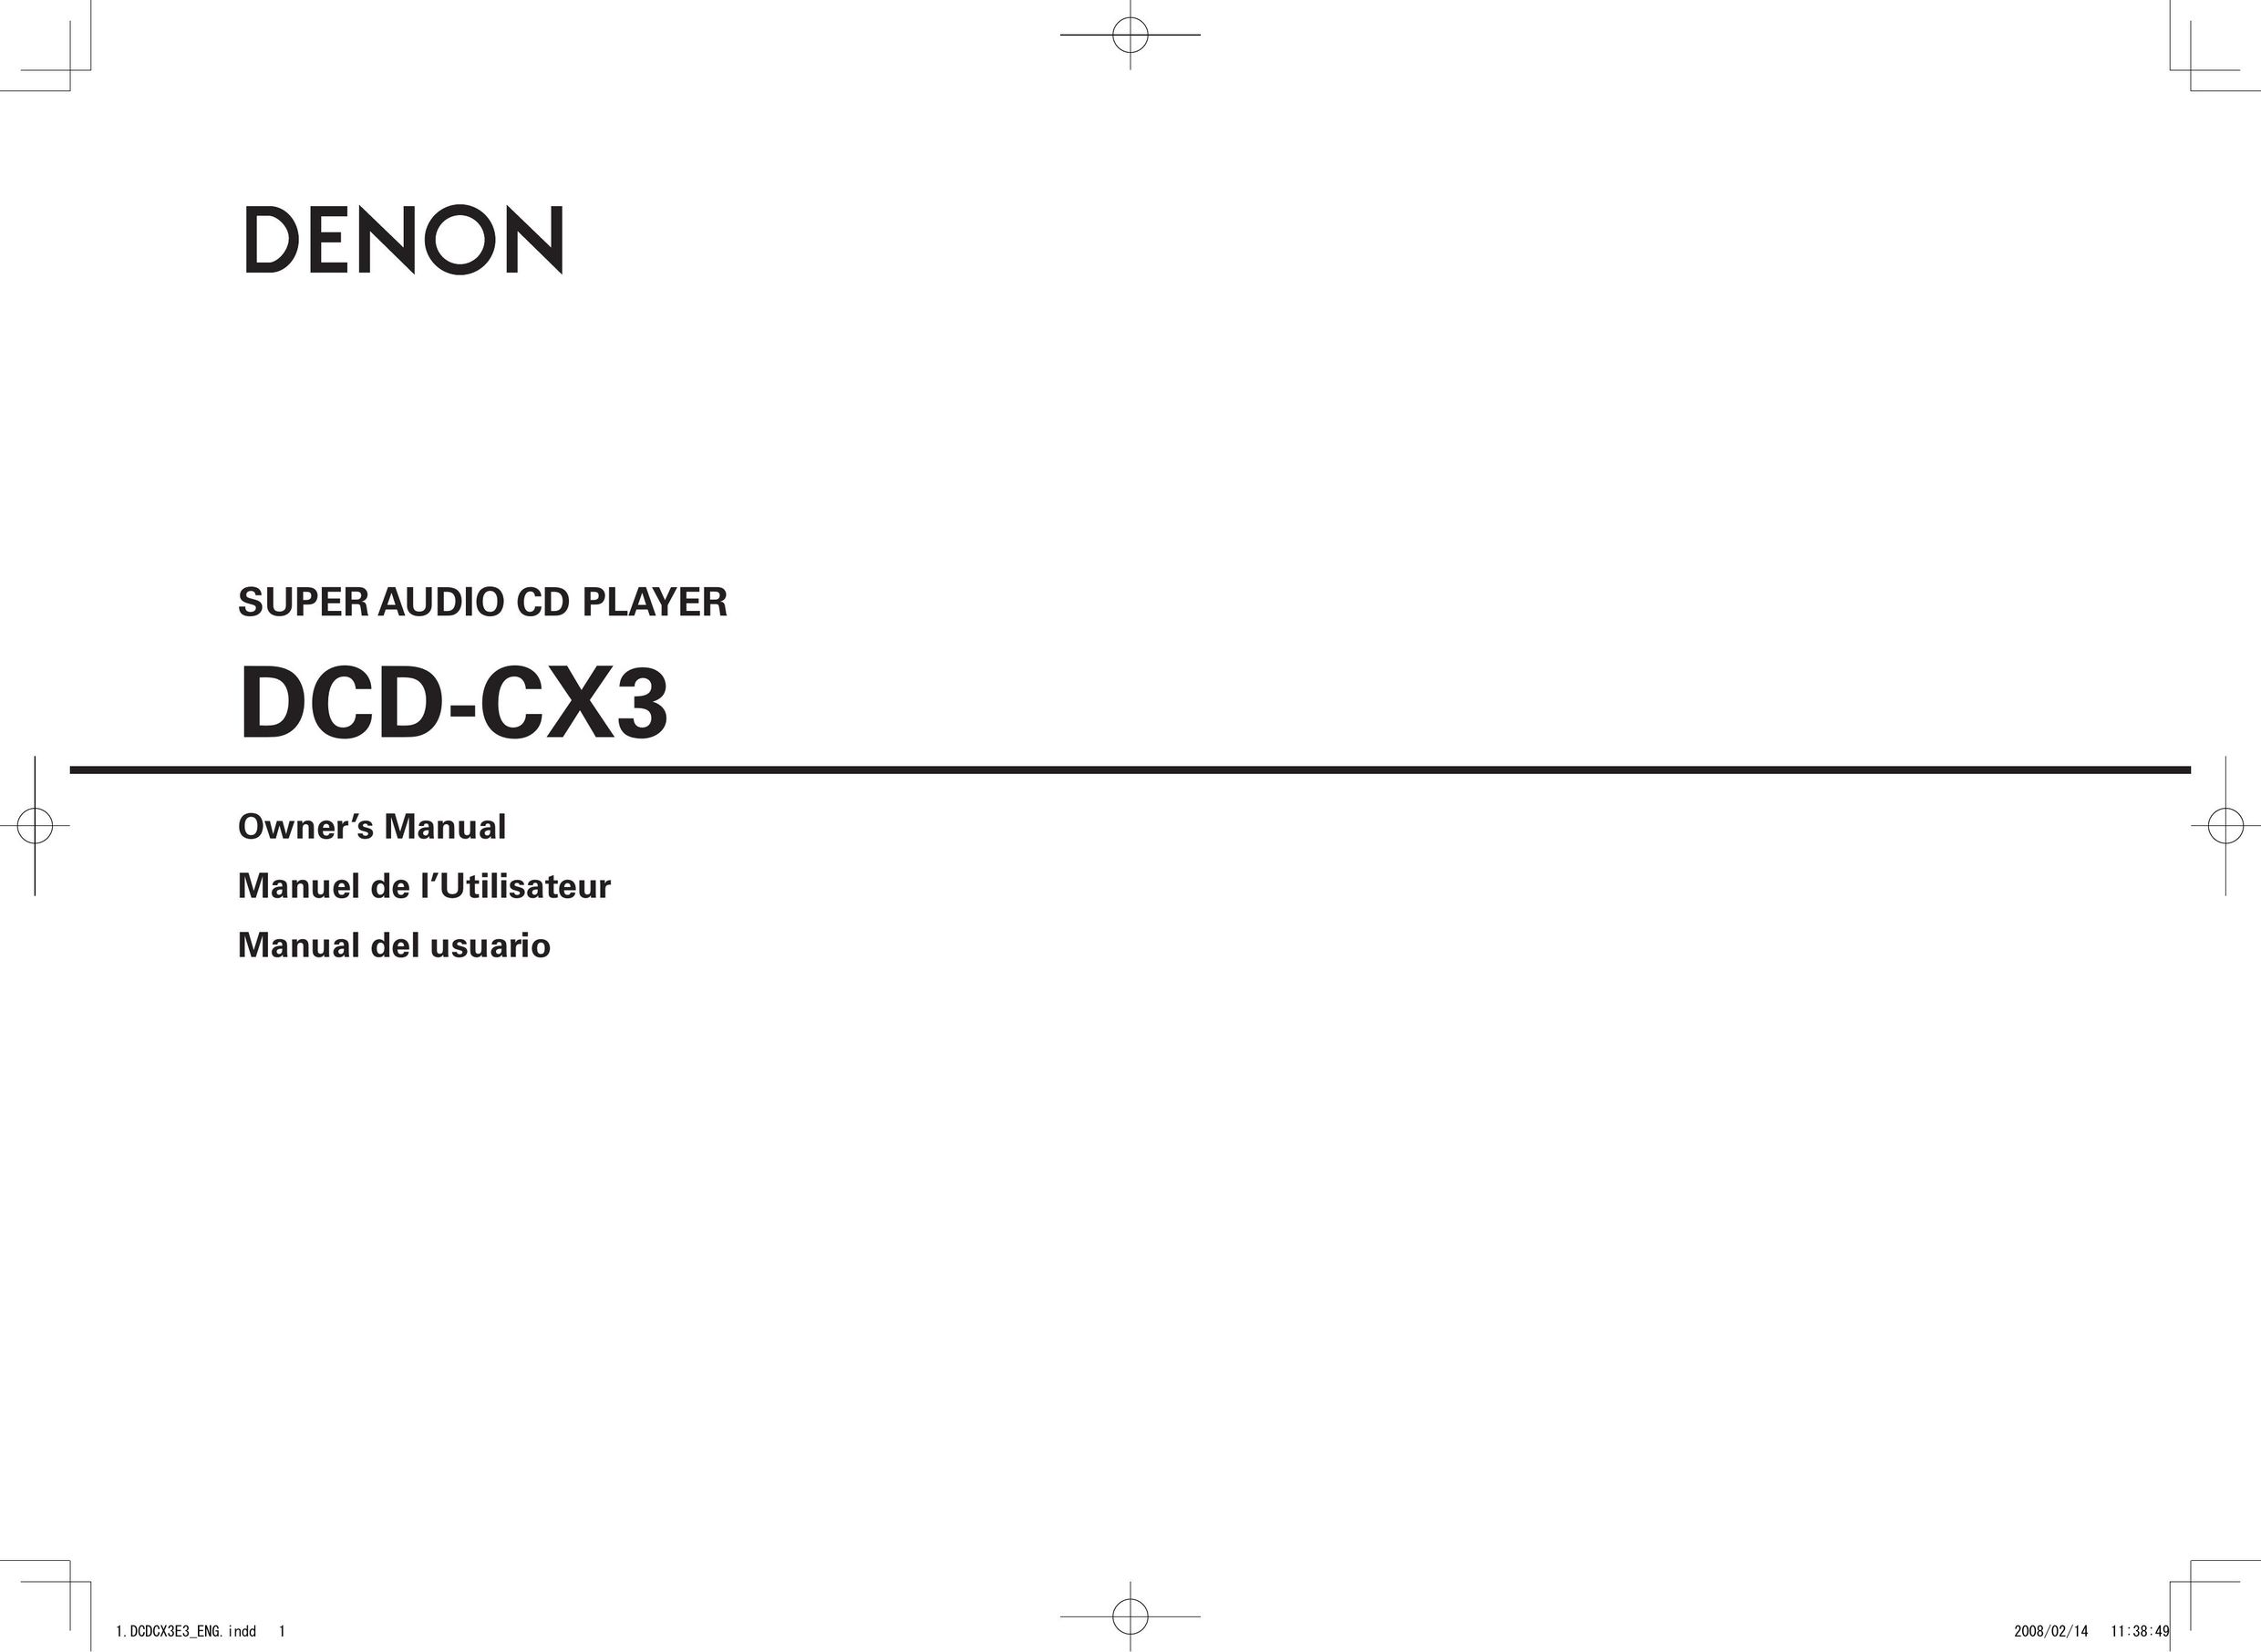 Denon DCD-CX3 CD Player User Manual